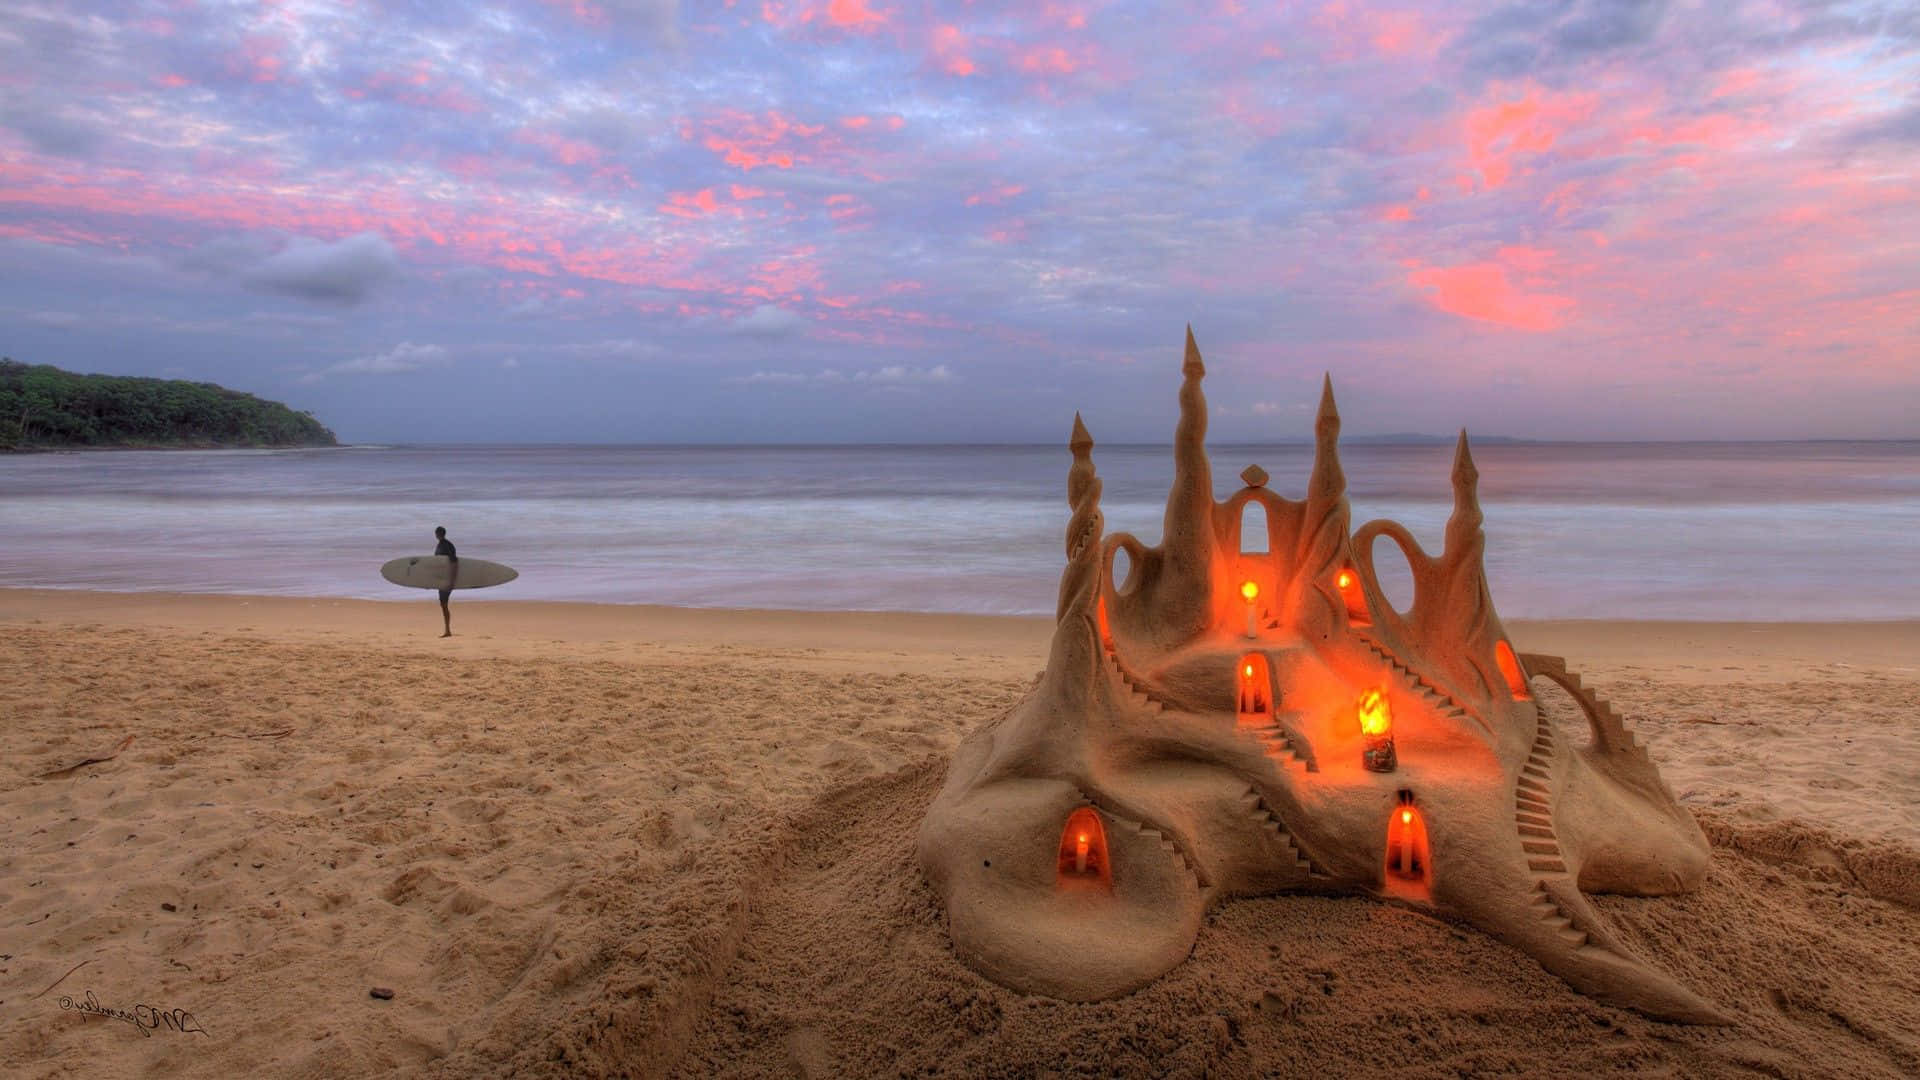 Caption: Majestic Sandcastles on a Bright, Sunny Beach Wallpaper